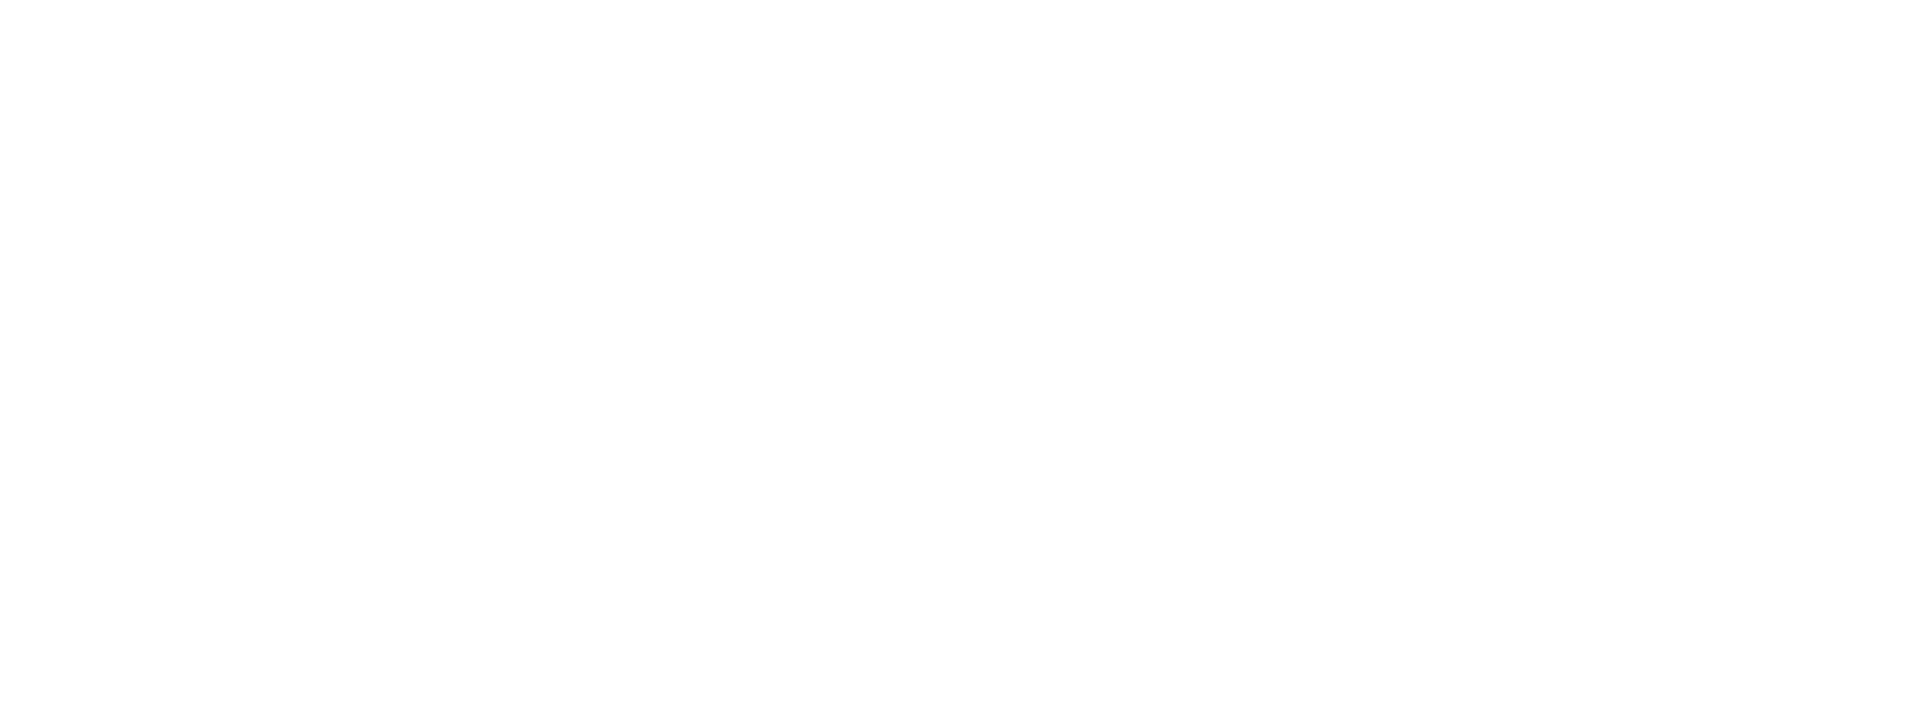 Temple of God - Religion and Church WordPress Theme Logo | Cmsmasters studio